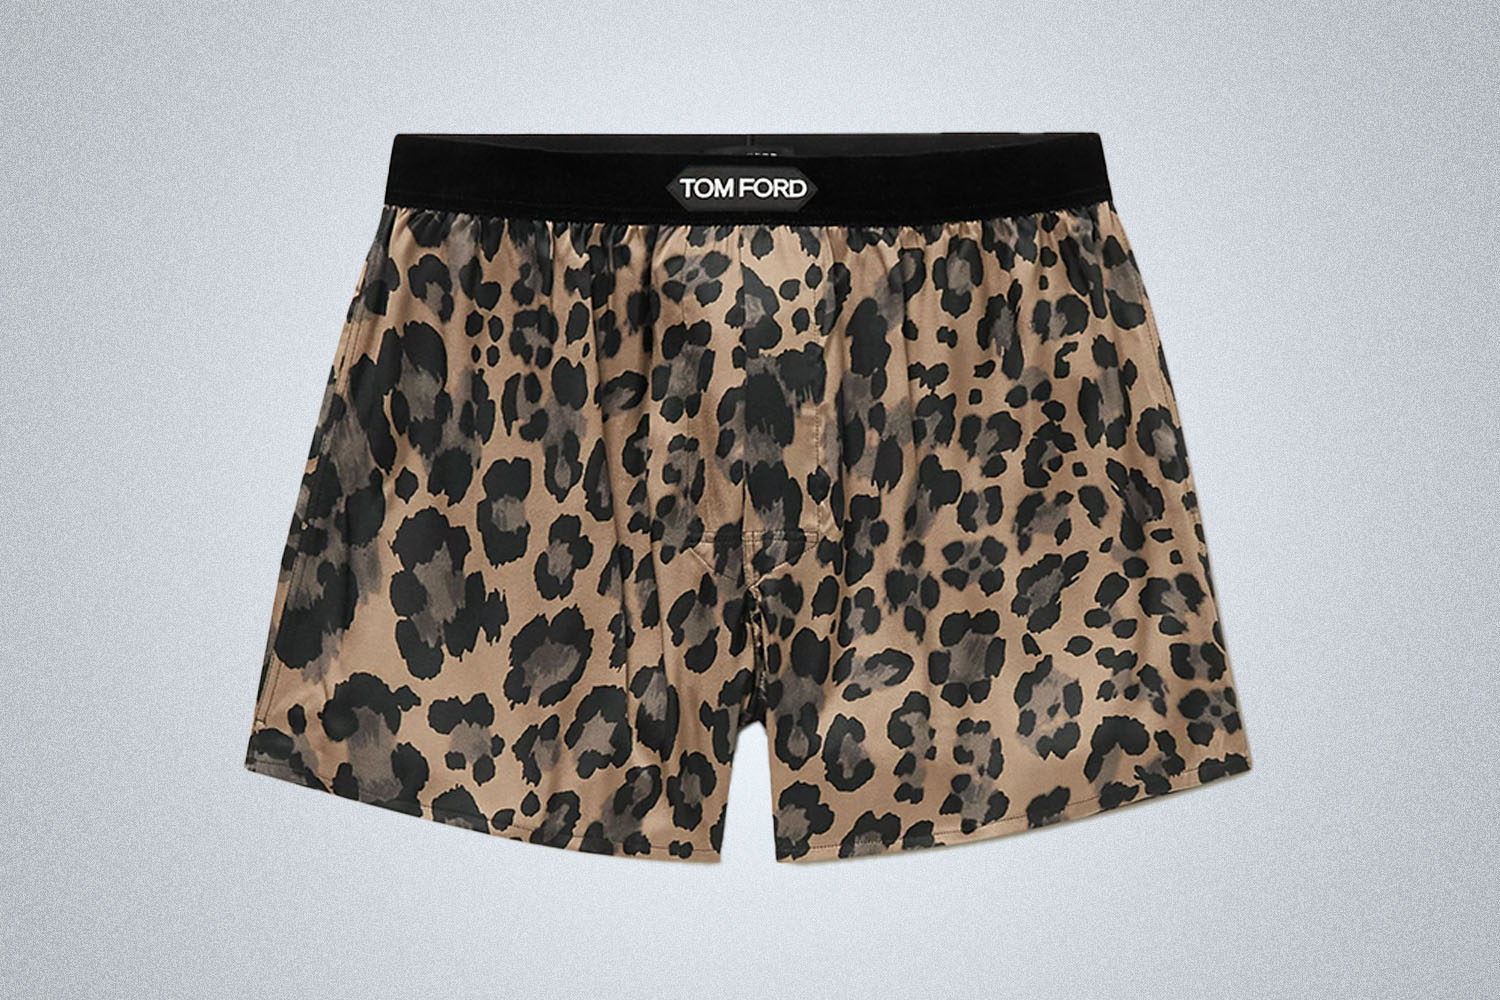 A pair of cheetah print underwear on a grey background